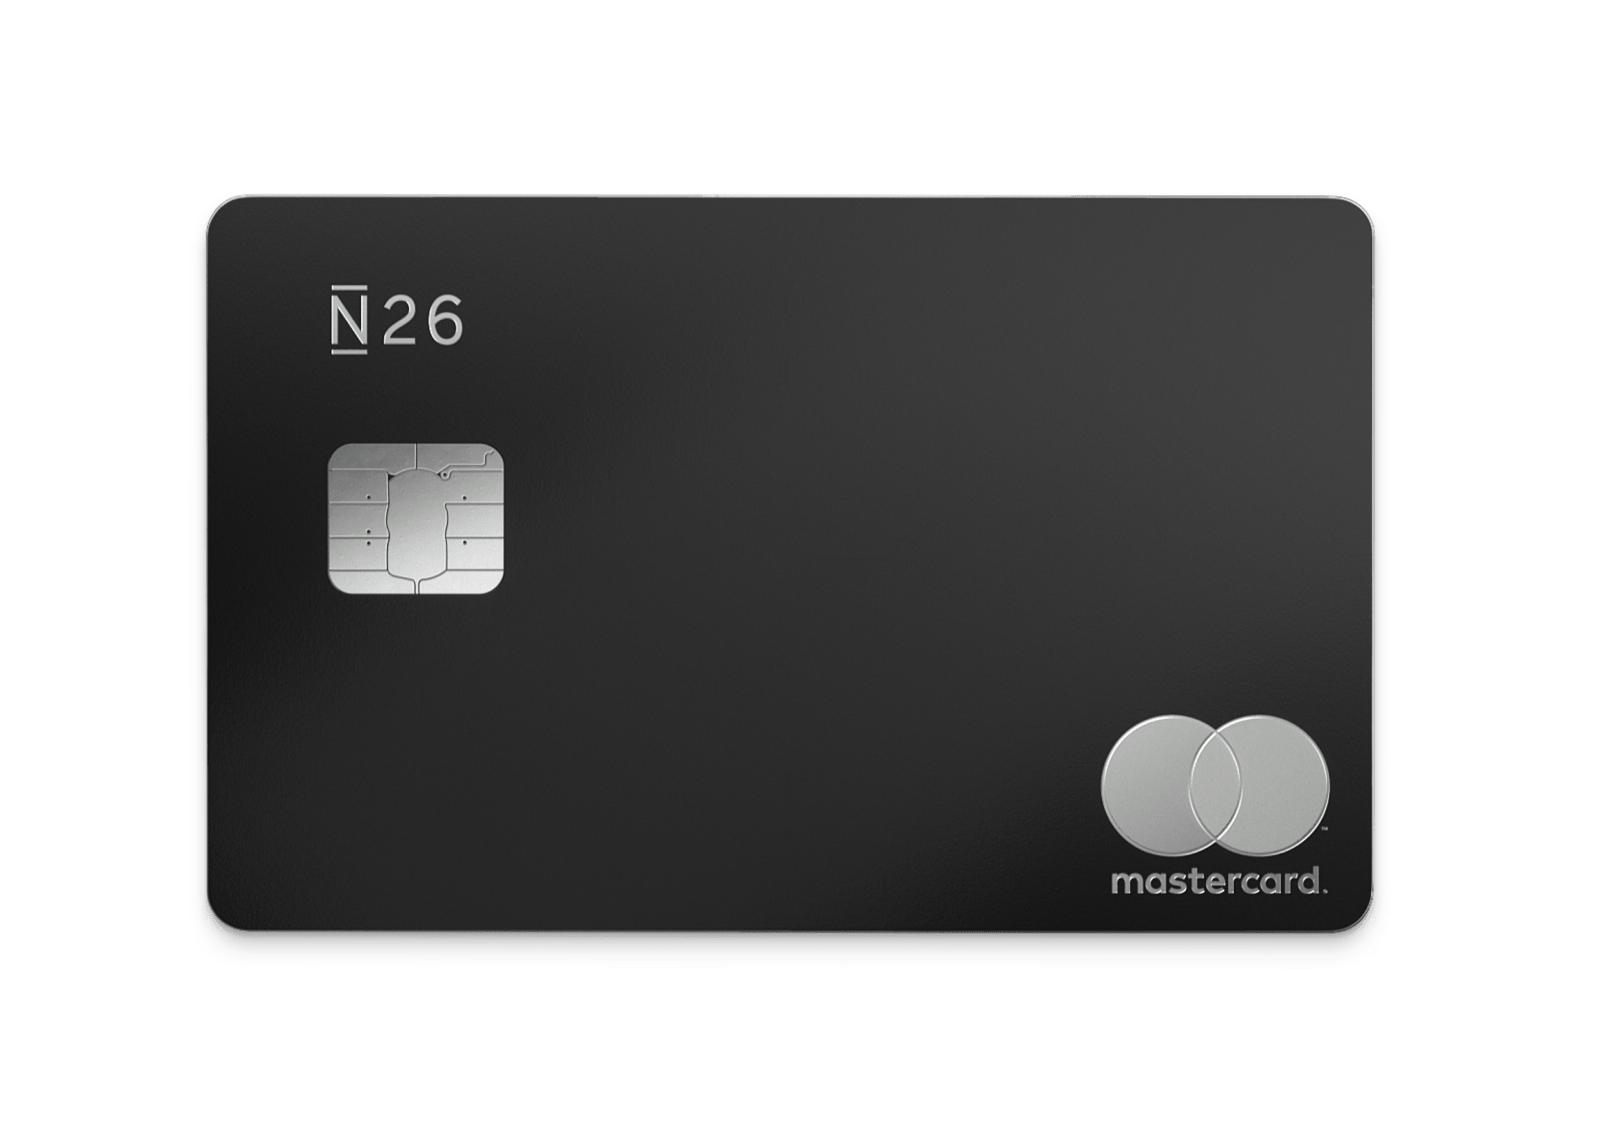 Kreditkarte N26 Mastercard - Wie melde ich mich an?